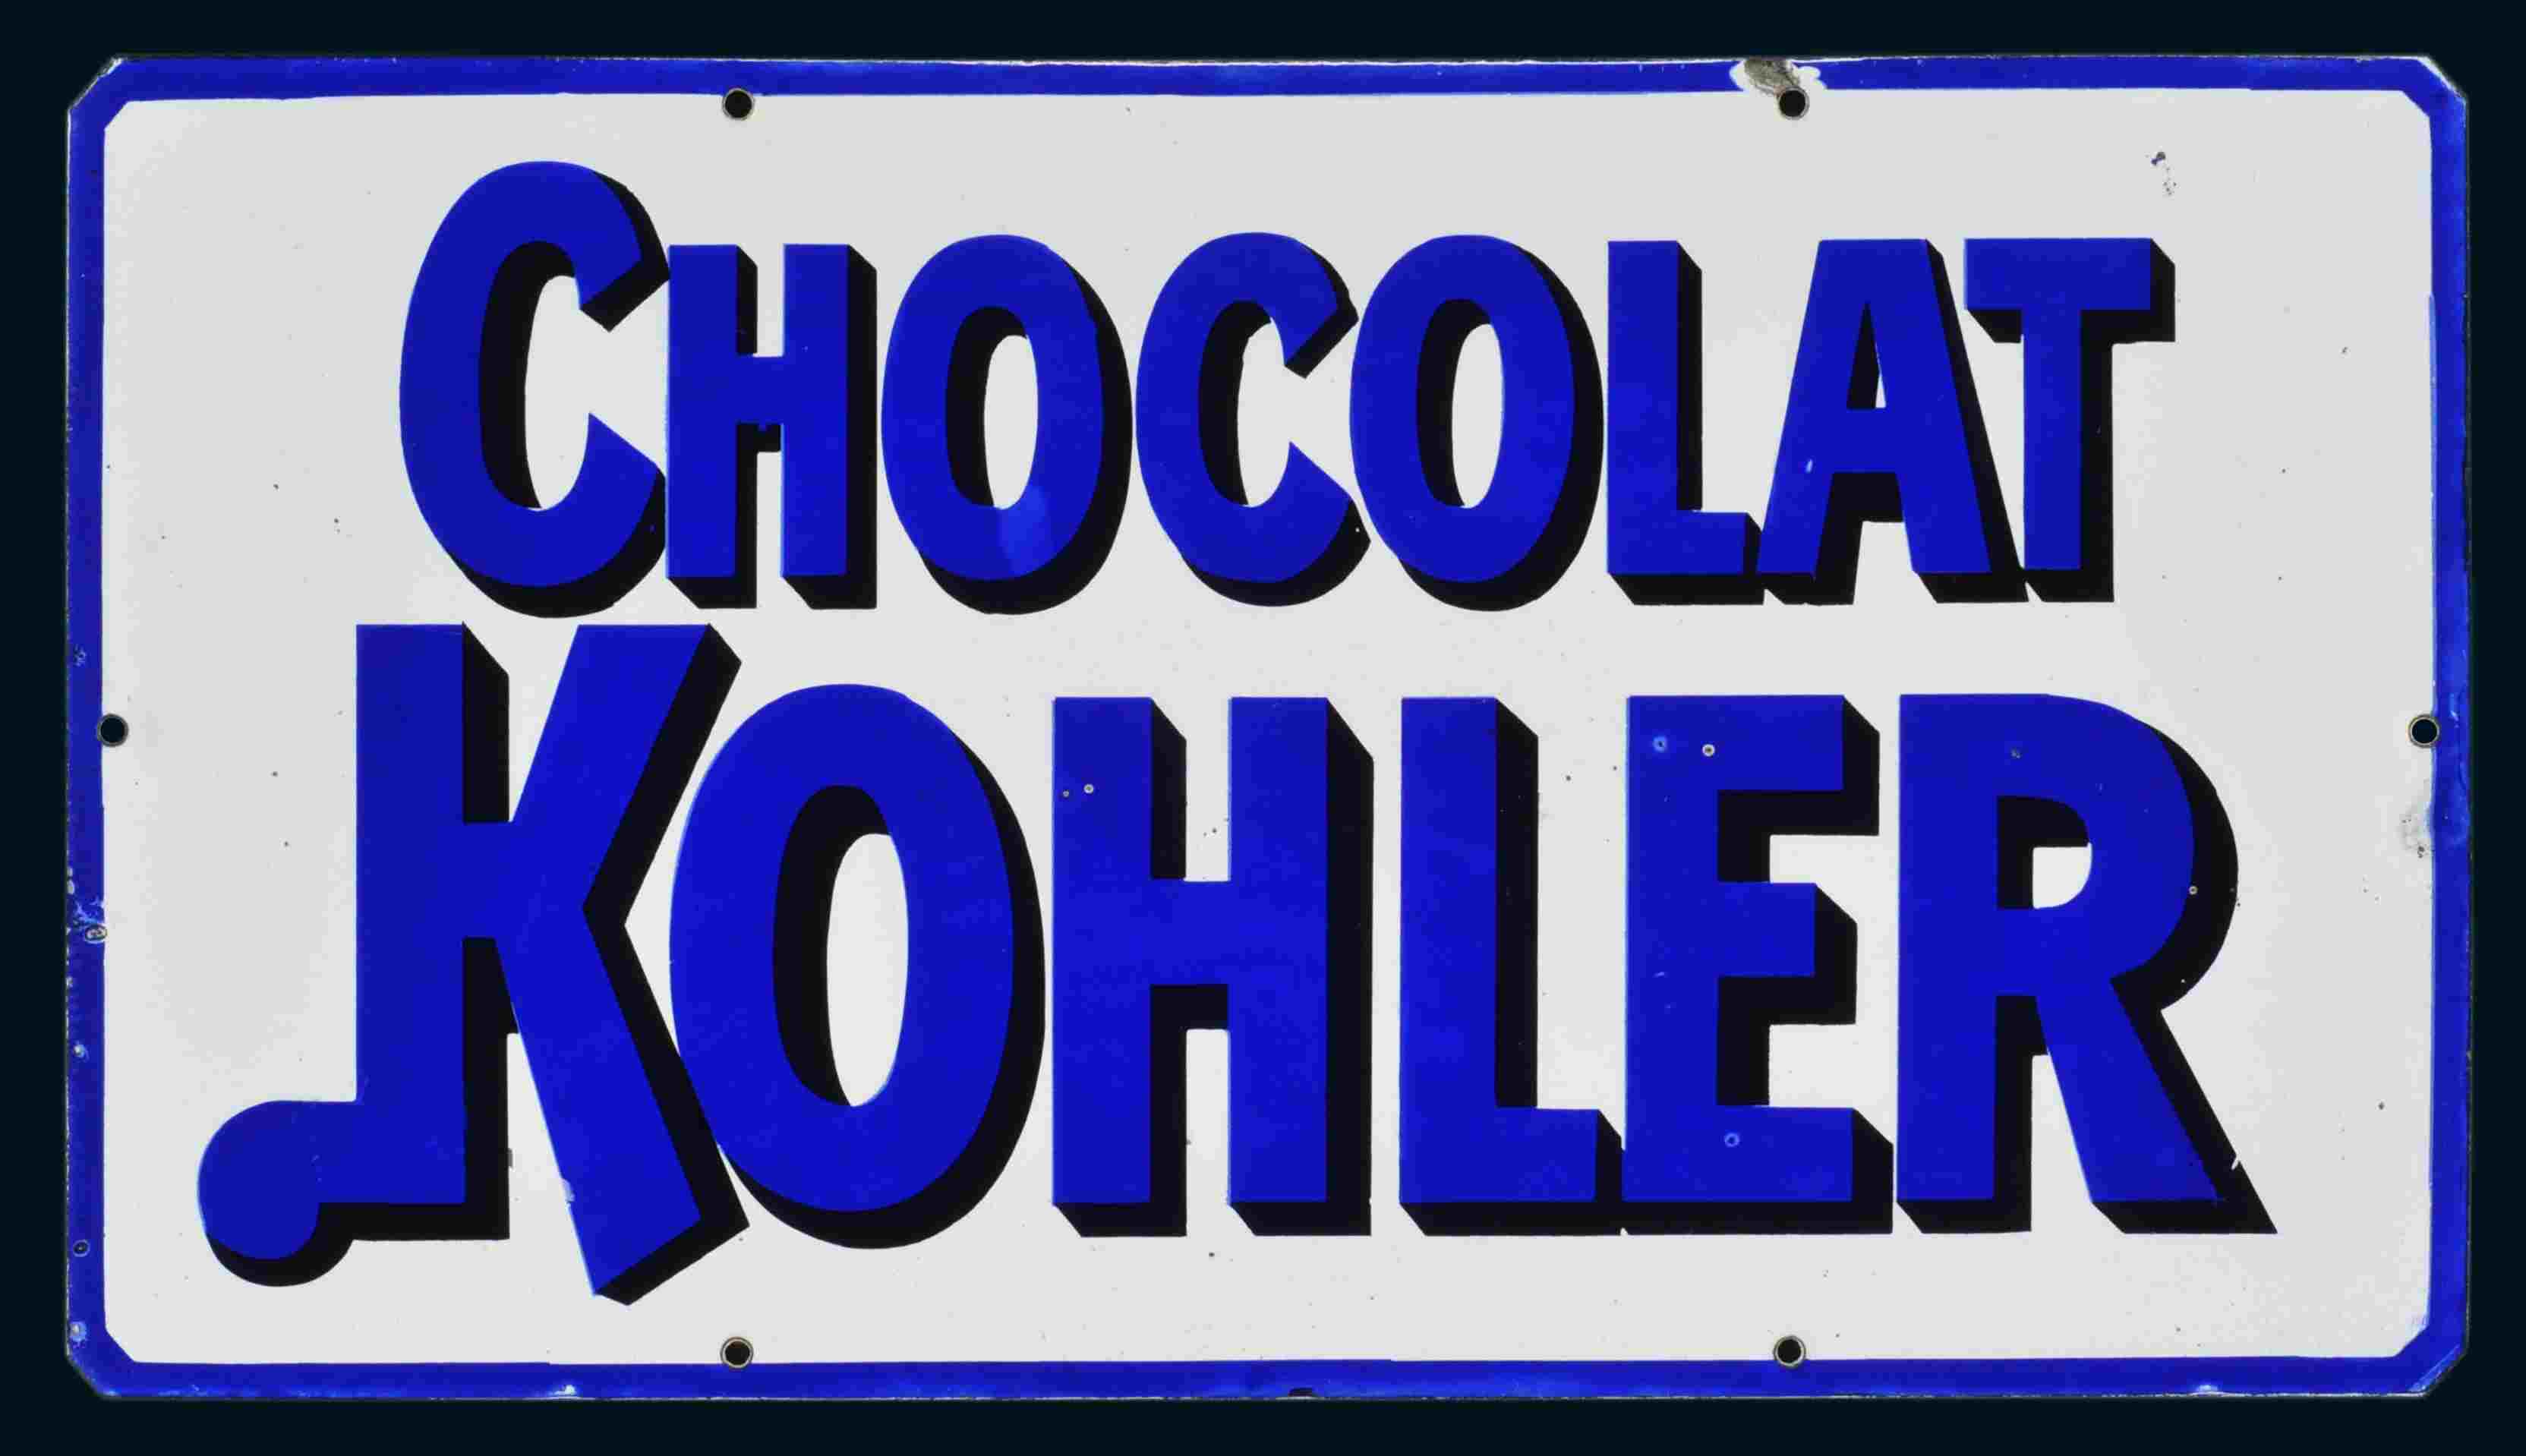 Chocolat Kohler 